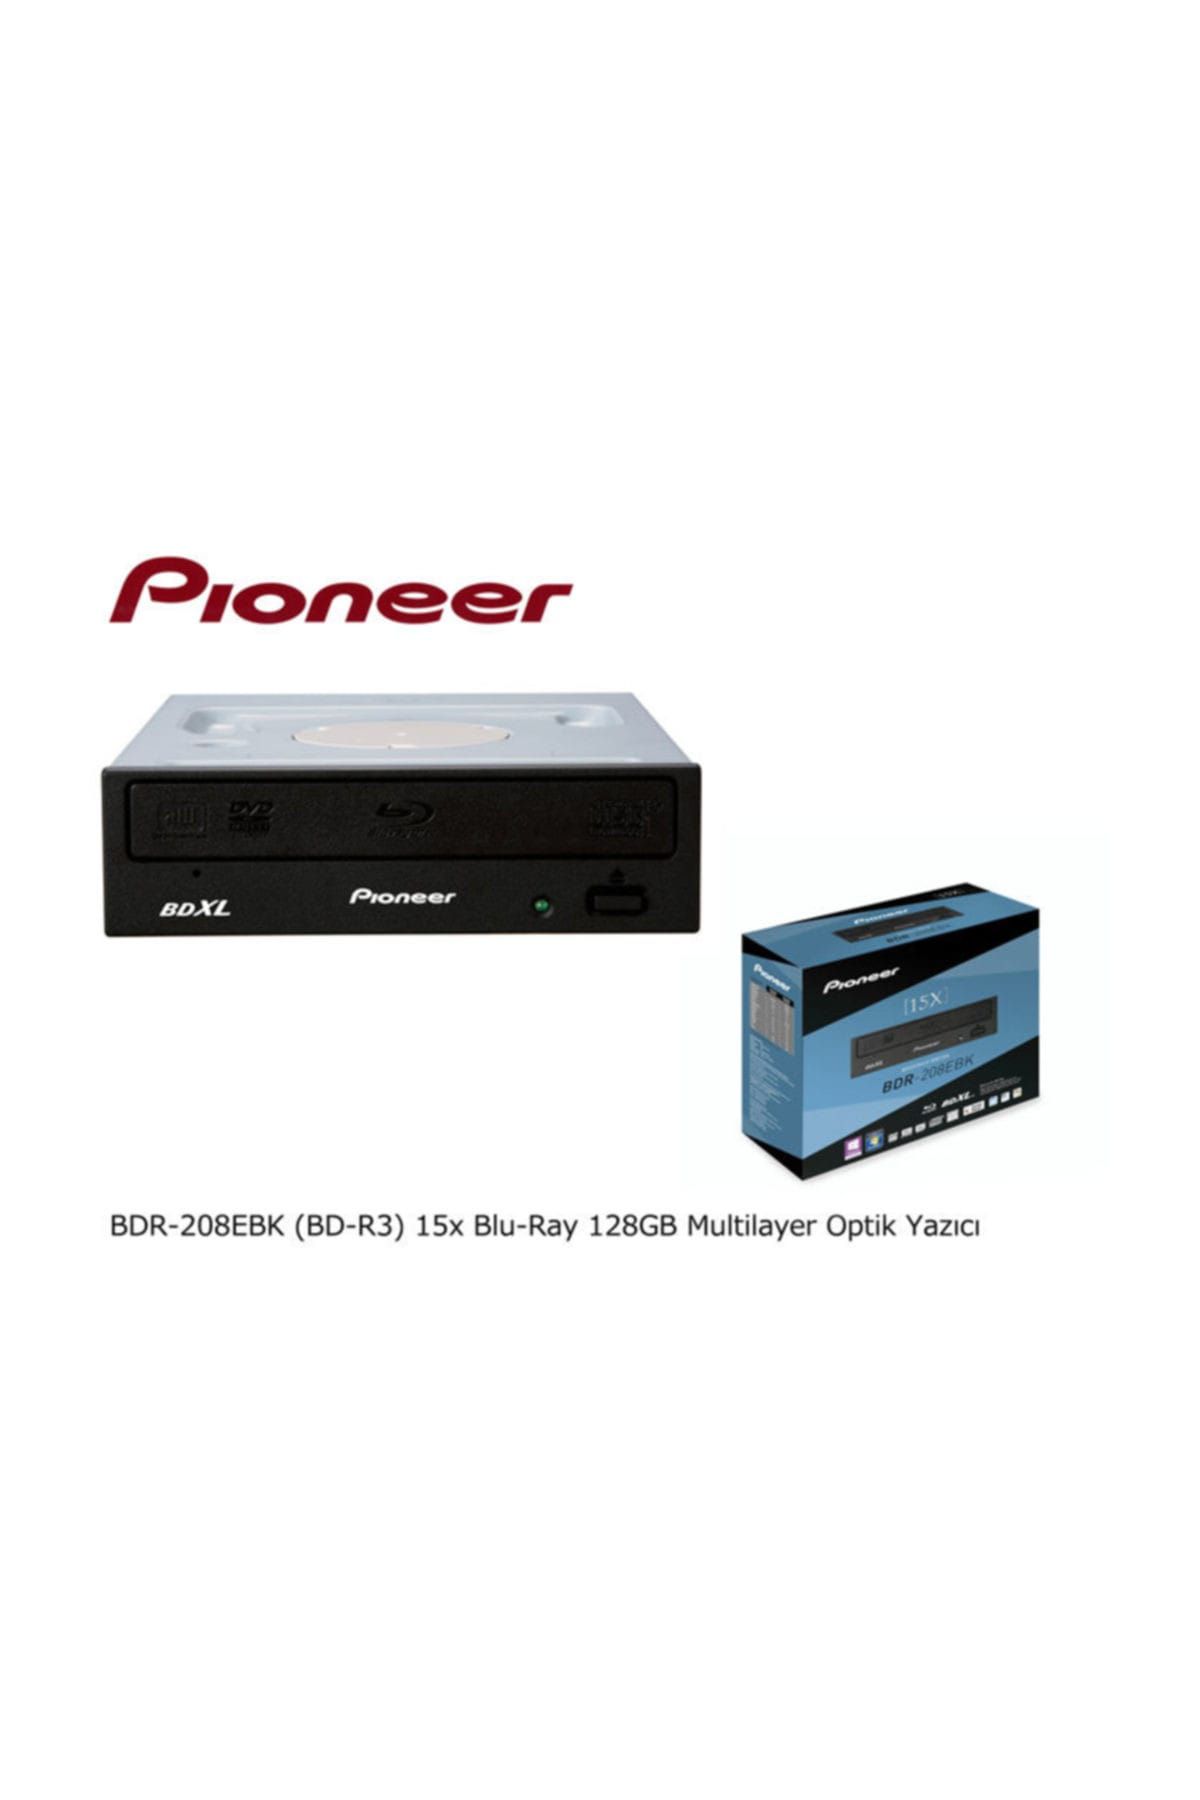 Pioneer Bdr-208ebk (bd-r3) 15x Blu-ray 128gb Multilayer Optik Yazıcı